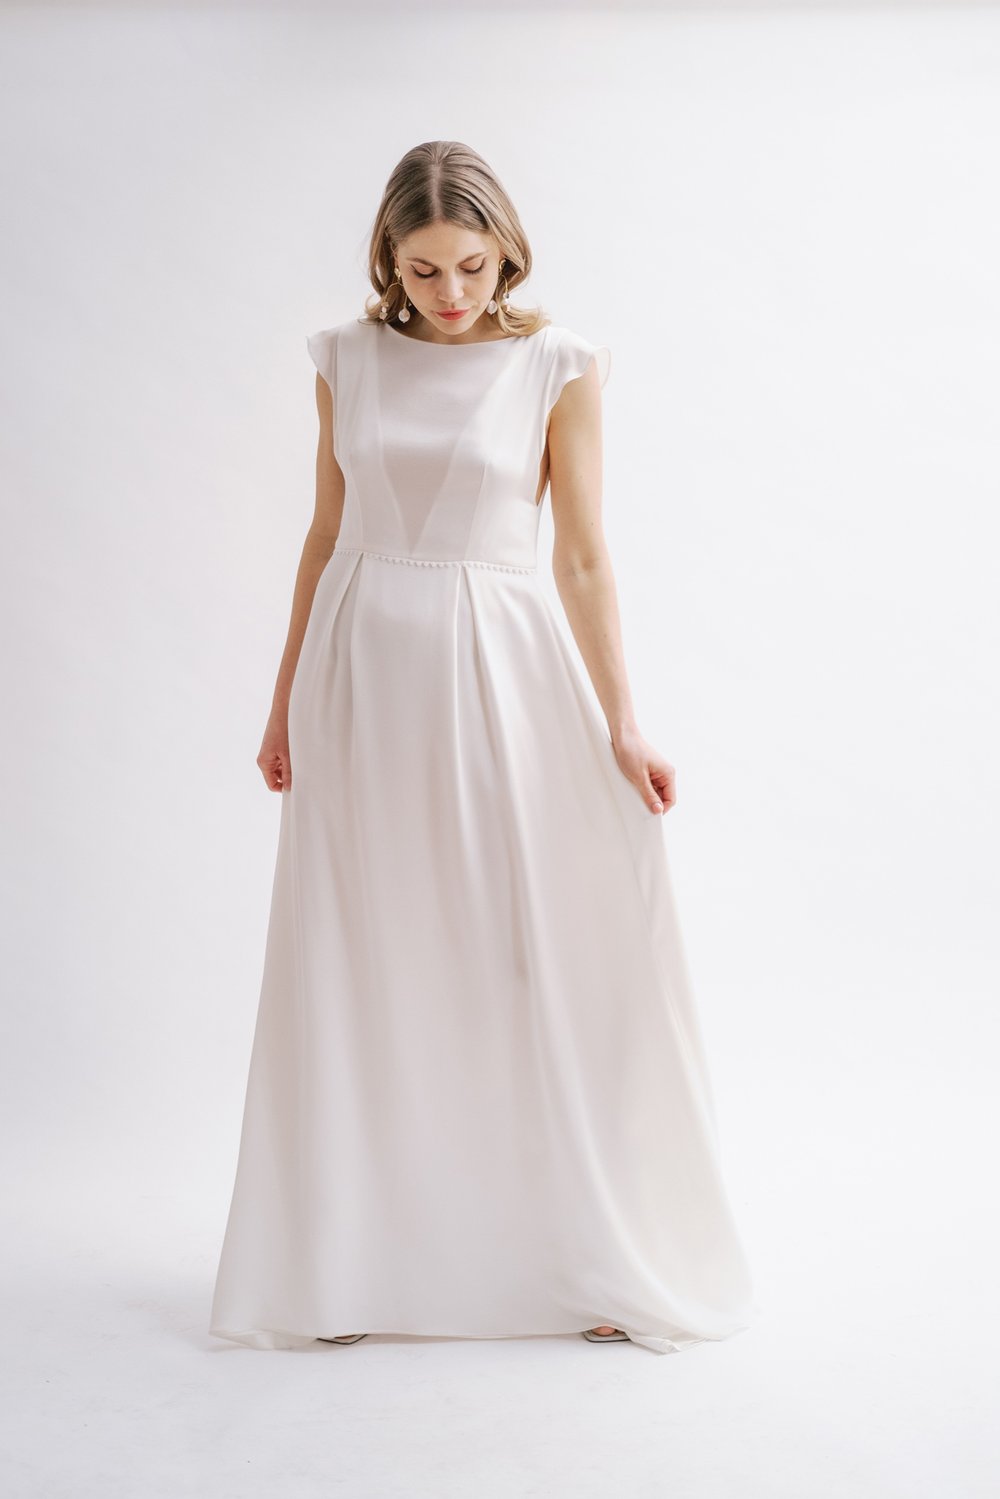 Agapanthus modern silk wedding gown Kate Beaumont Sheffield 1.jpg